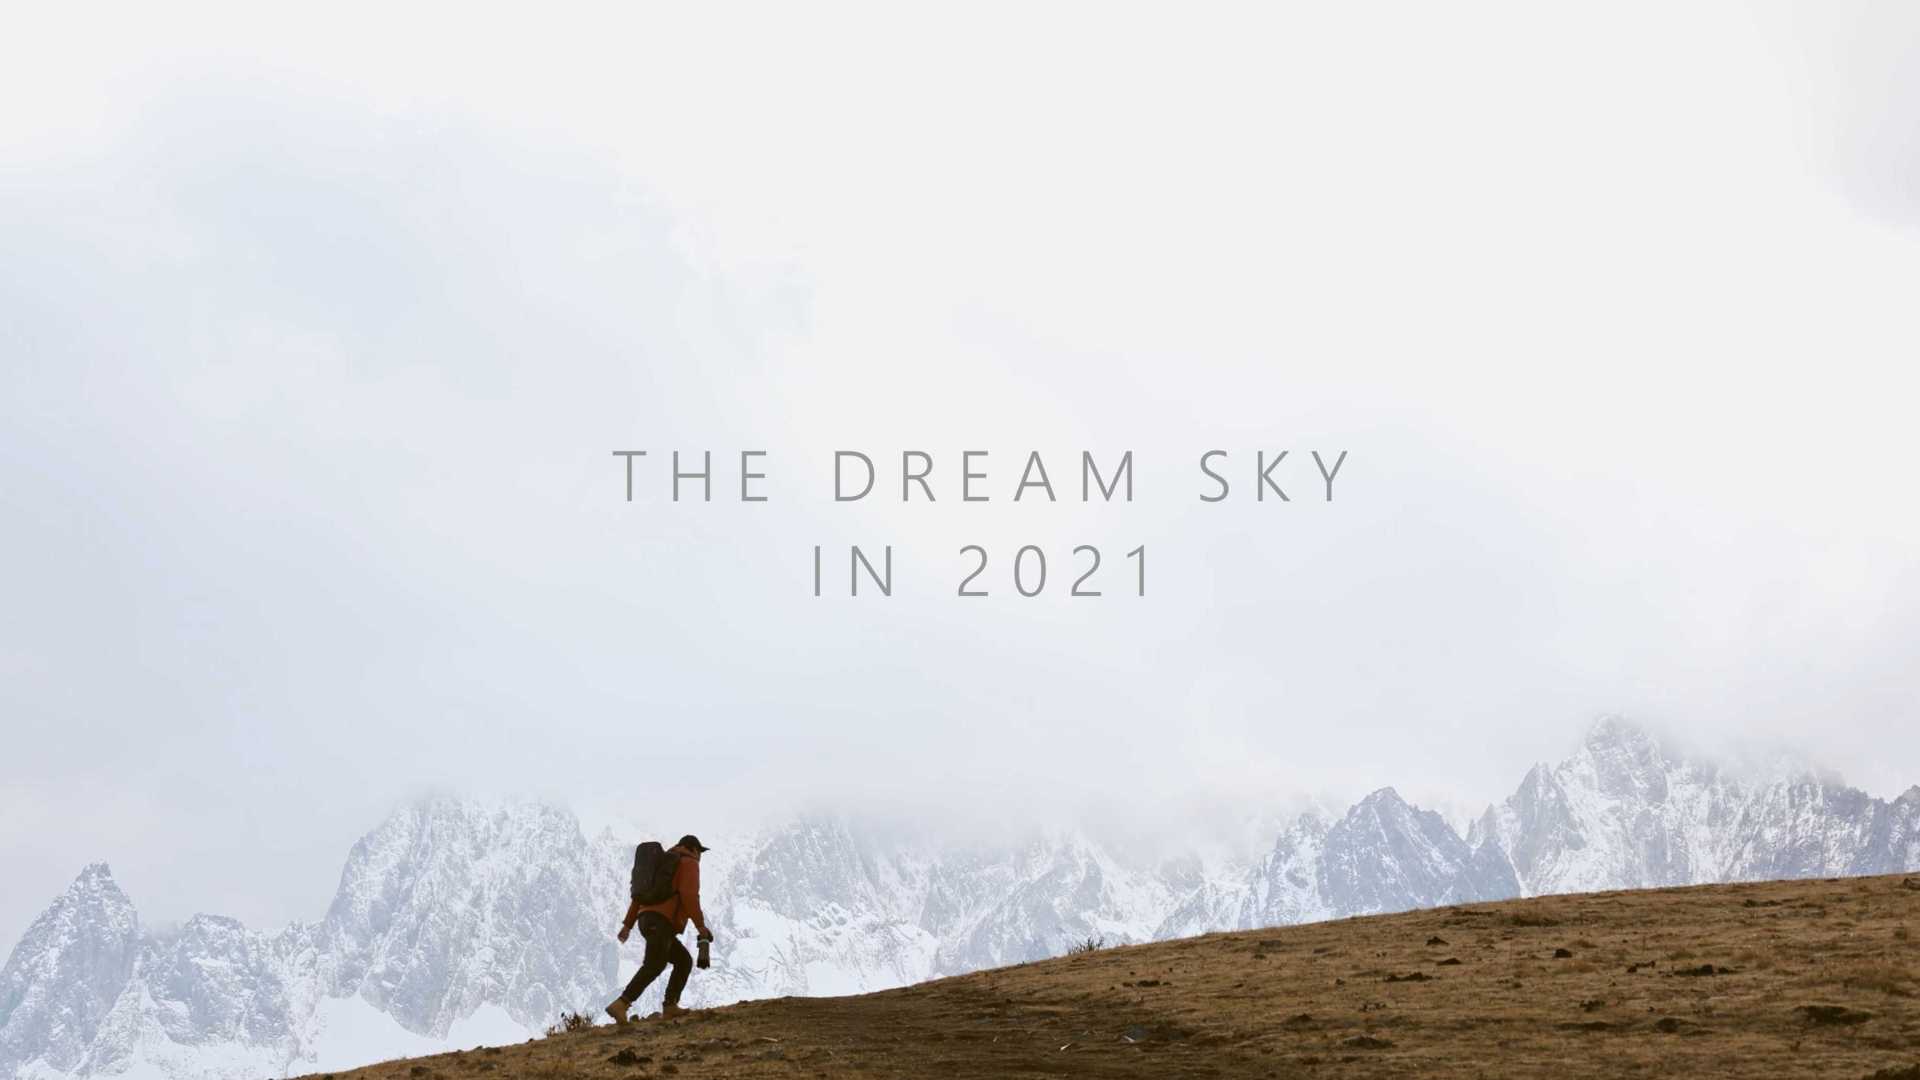 THE DREAM SKY IN 2021——来自彩云之南的梦幻天空